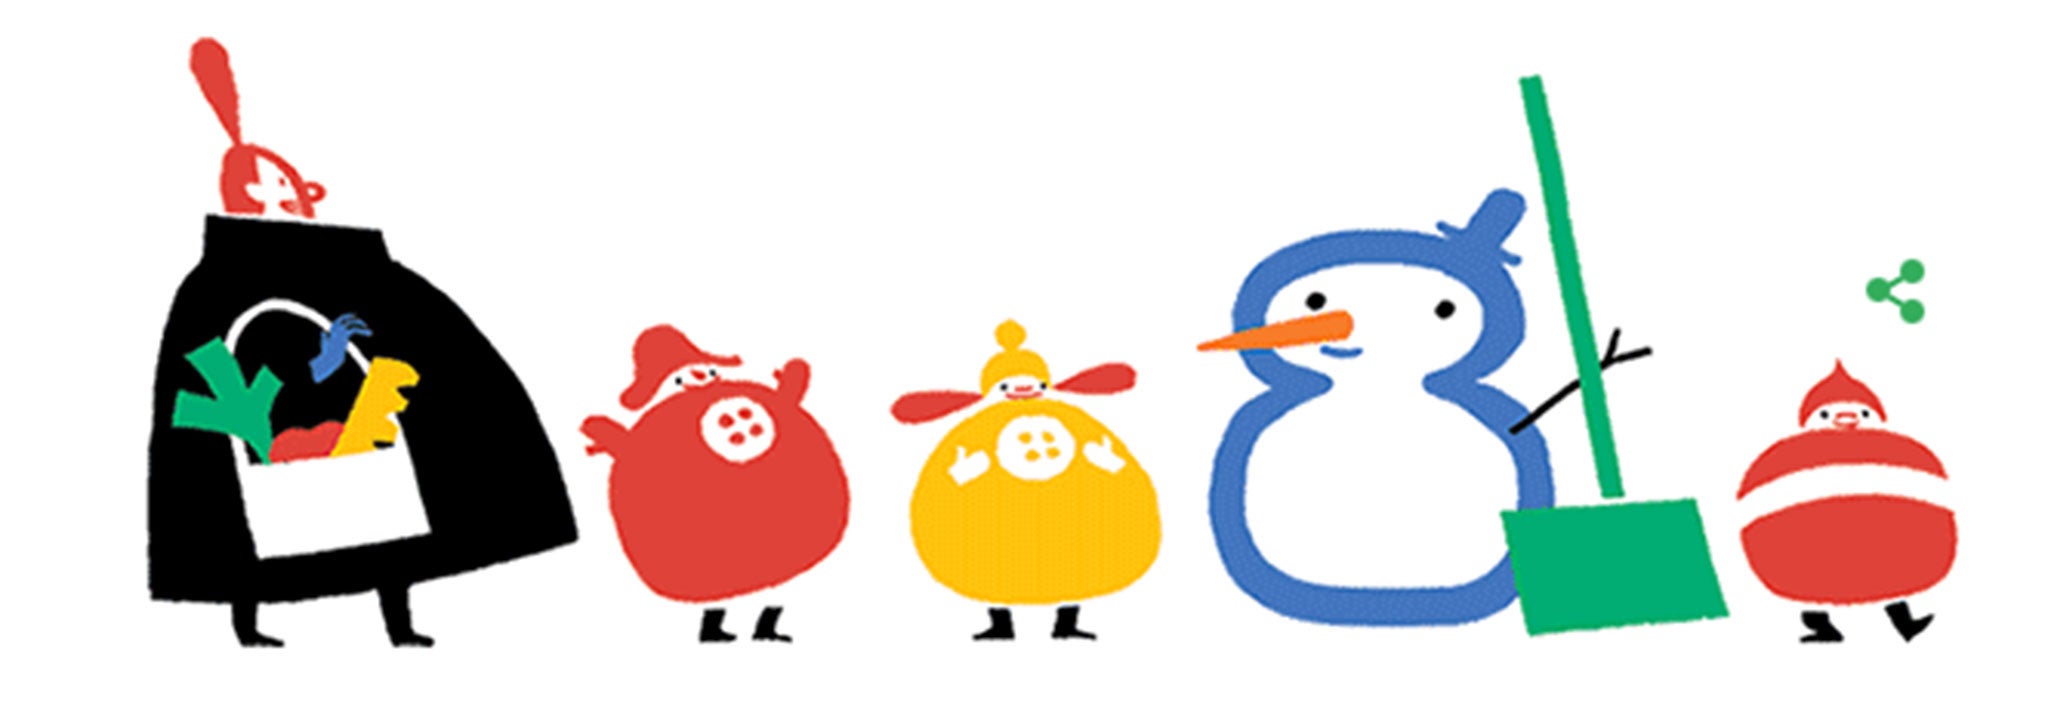 Google's Doodle marking the winter solstice